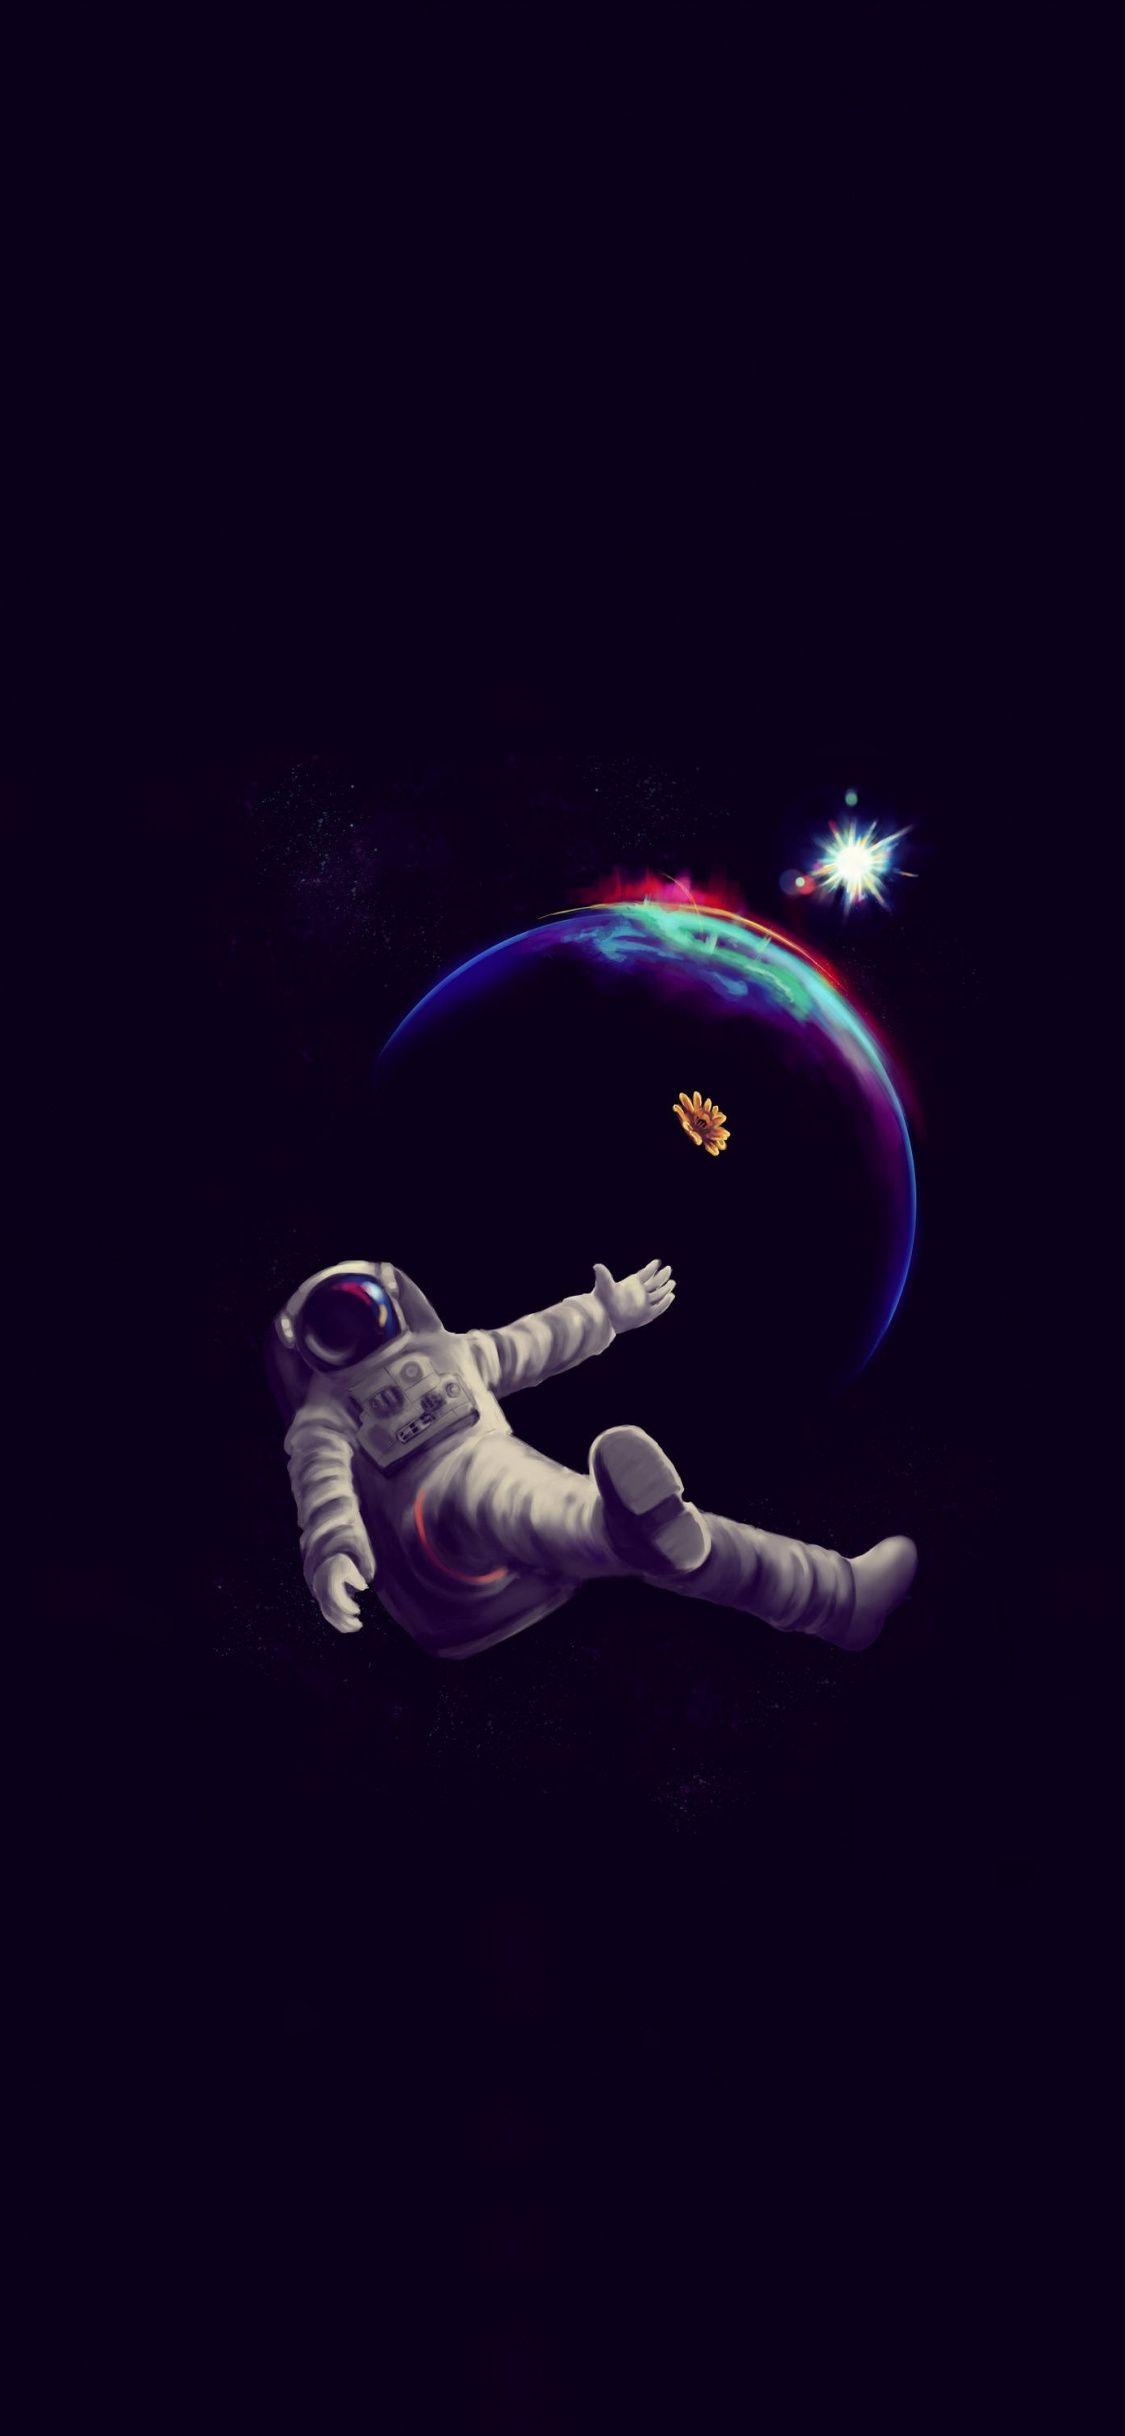 Astronaut iPhone Wallpapers - Top Free Astronaut iPhone Backgrounds ...